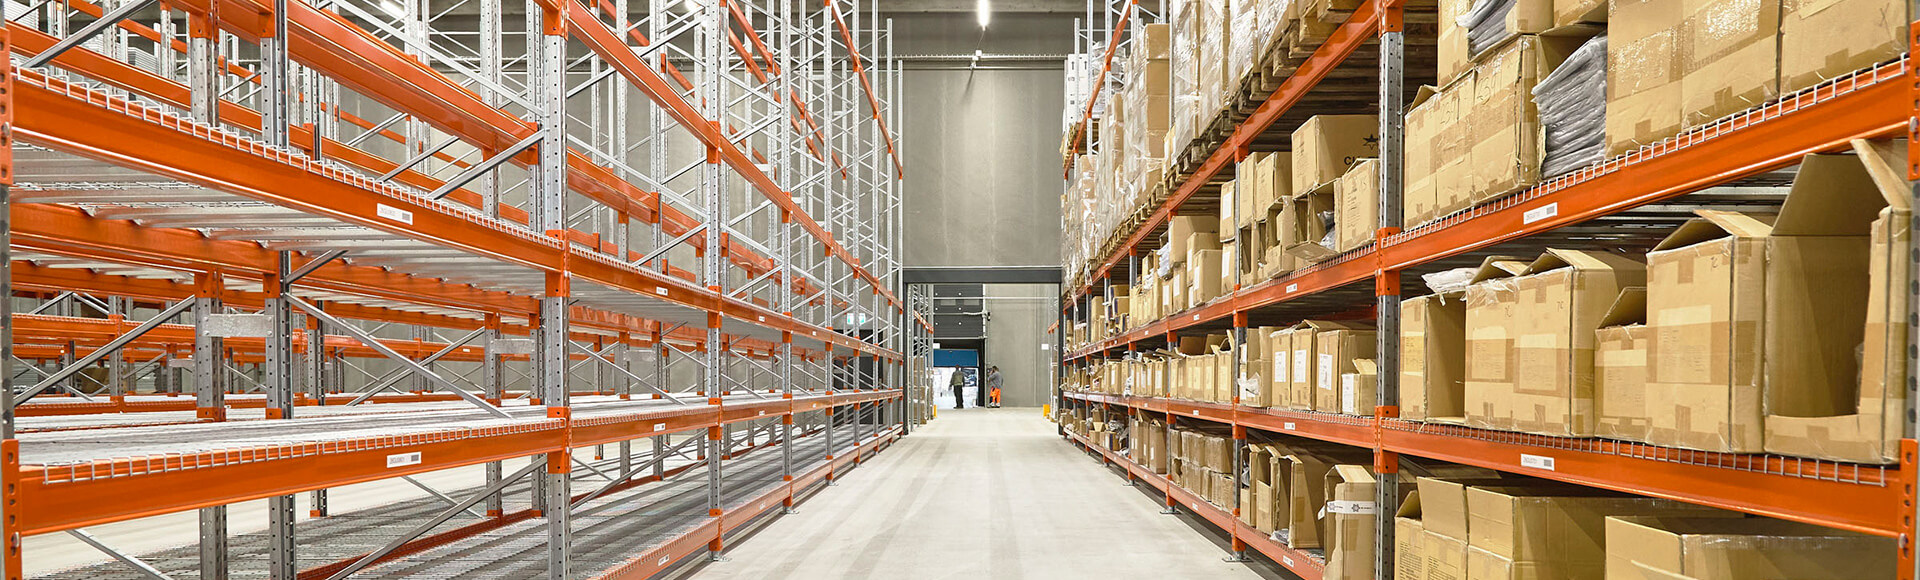 DK Company warehouse installed in nine weeks